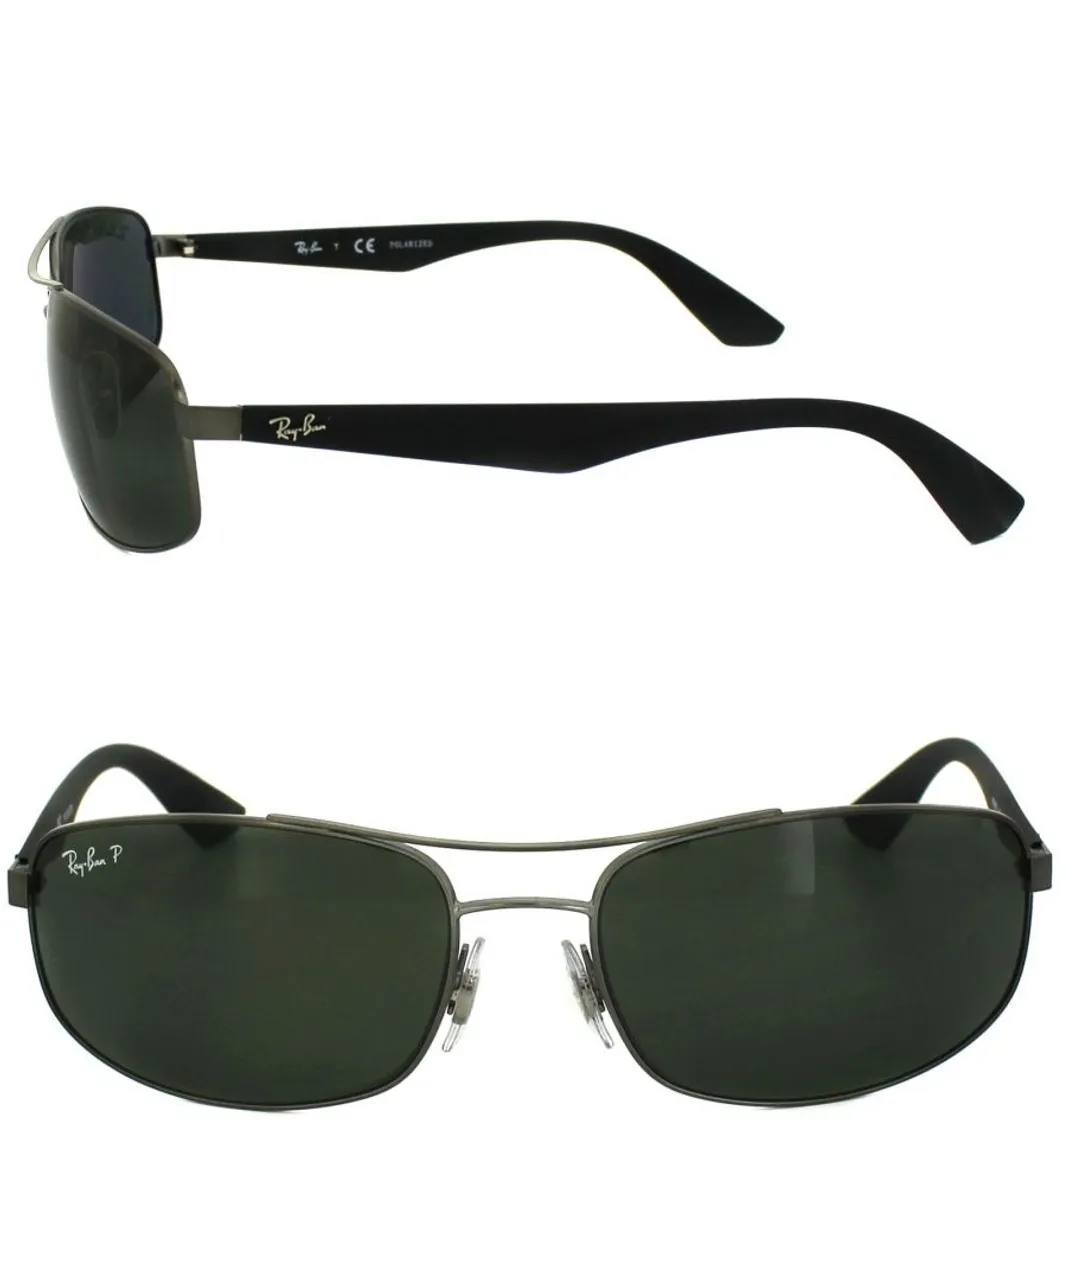 Ray-Ban Mens Sunglasses 3527 029/9A Matt Gunmetal Dark Green Polarized - Grey Metal (archived) - One